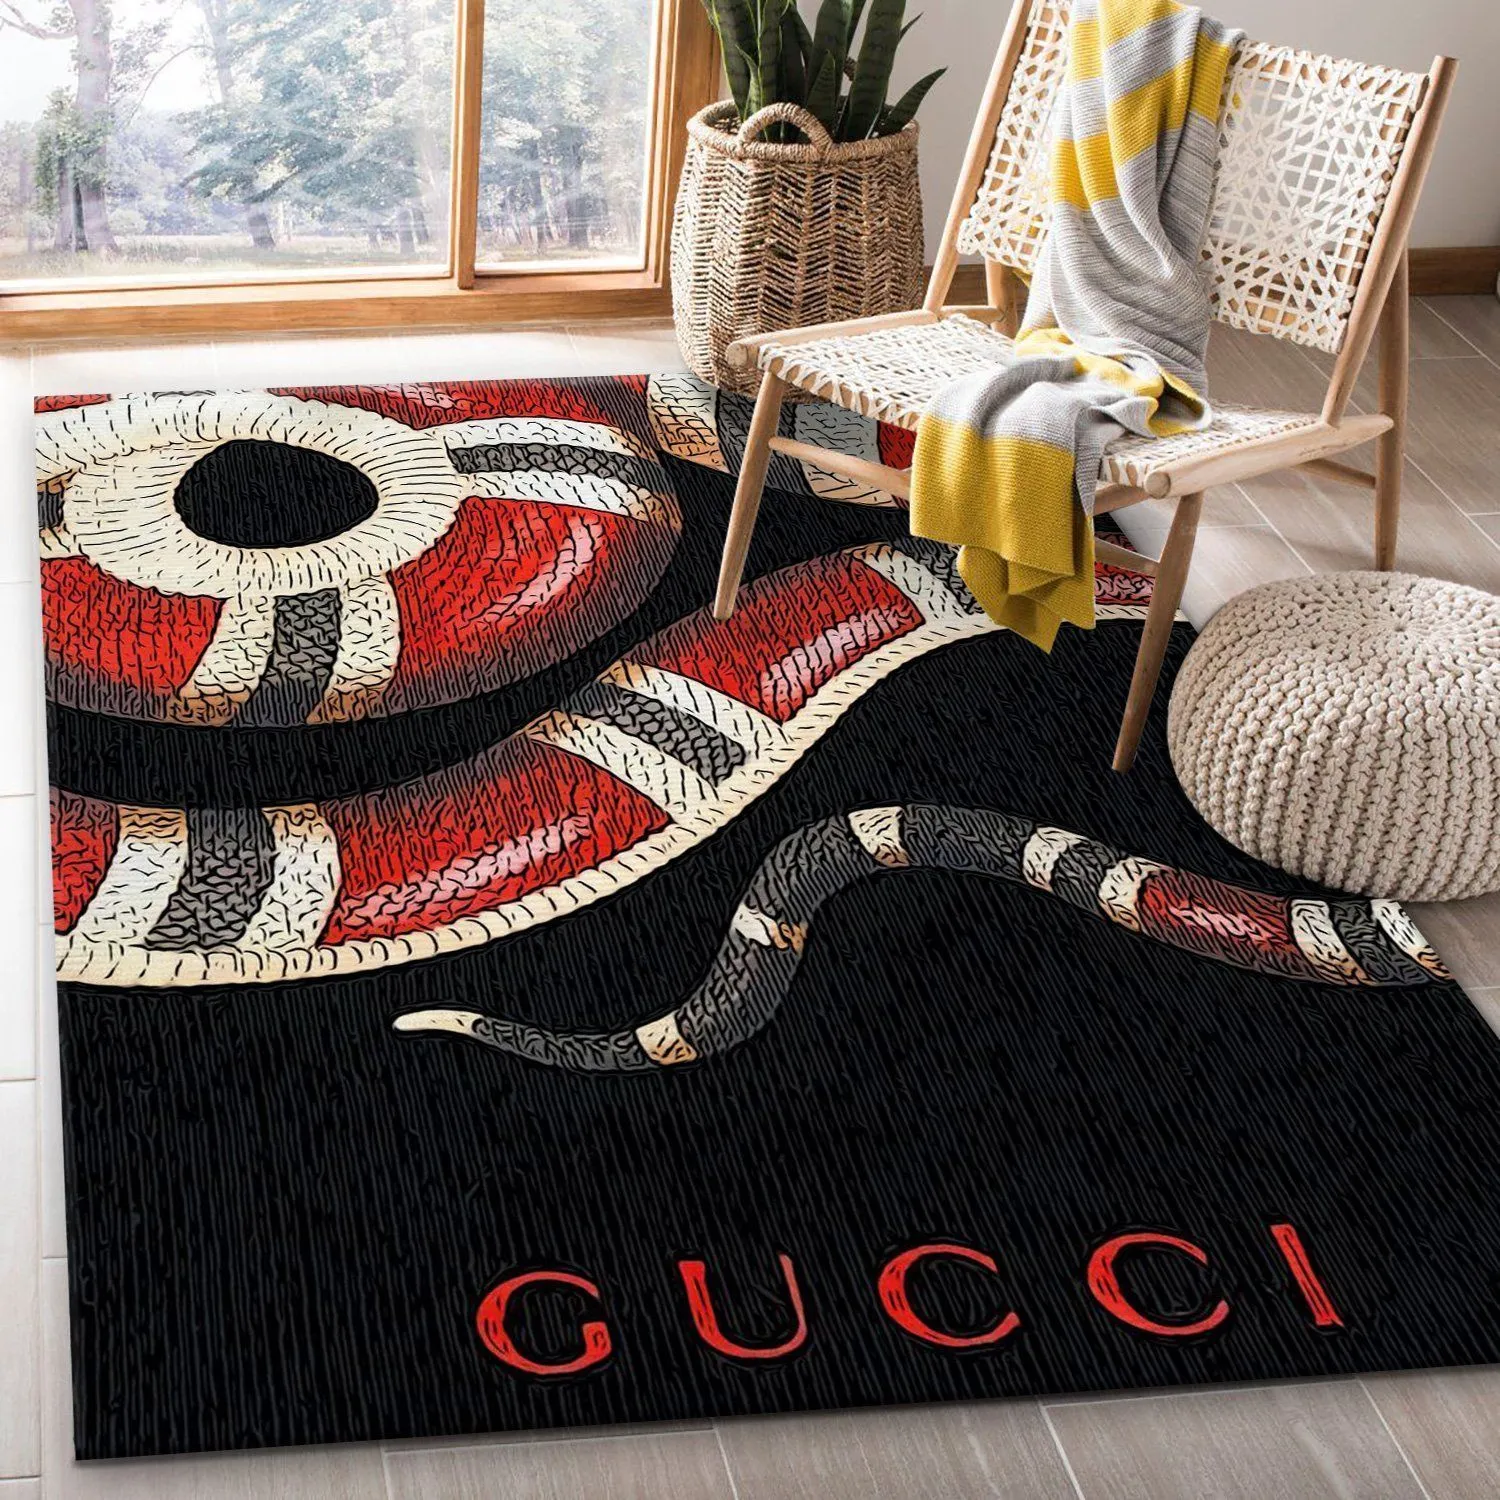 Gucci snake Rectangle Rug Luxury Fashion Brand Door Mat Home Decor Area Carpet